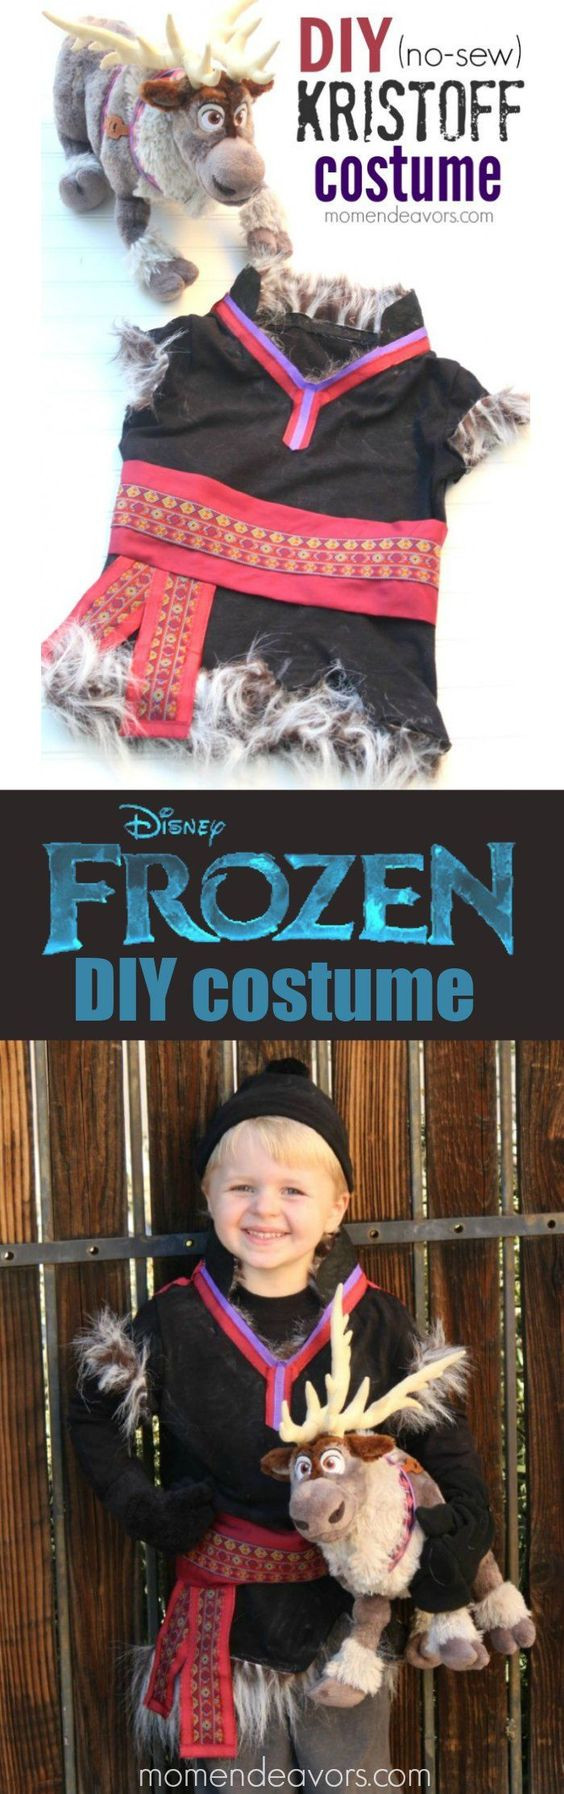 DIY Kristoff Costume
 Disney frozen Halloween costumes for boys and Disney